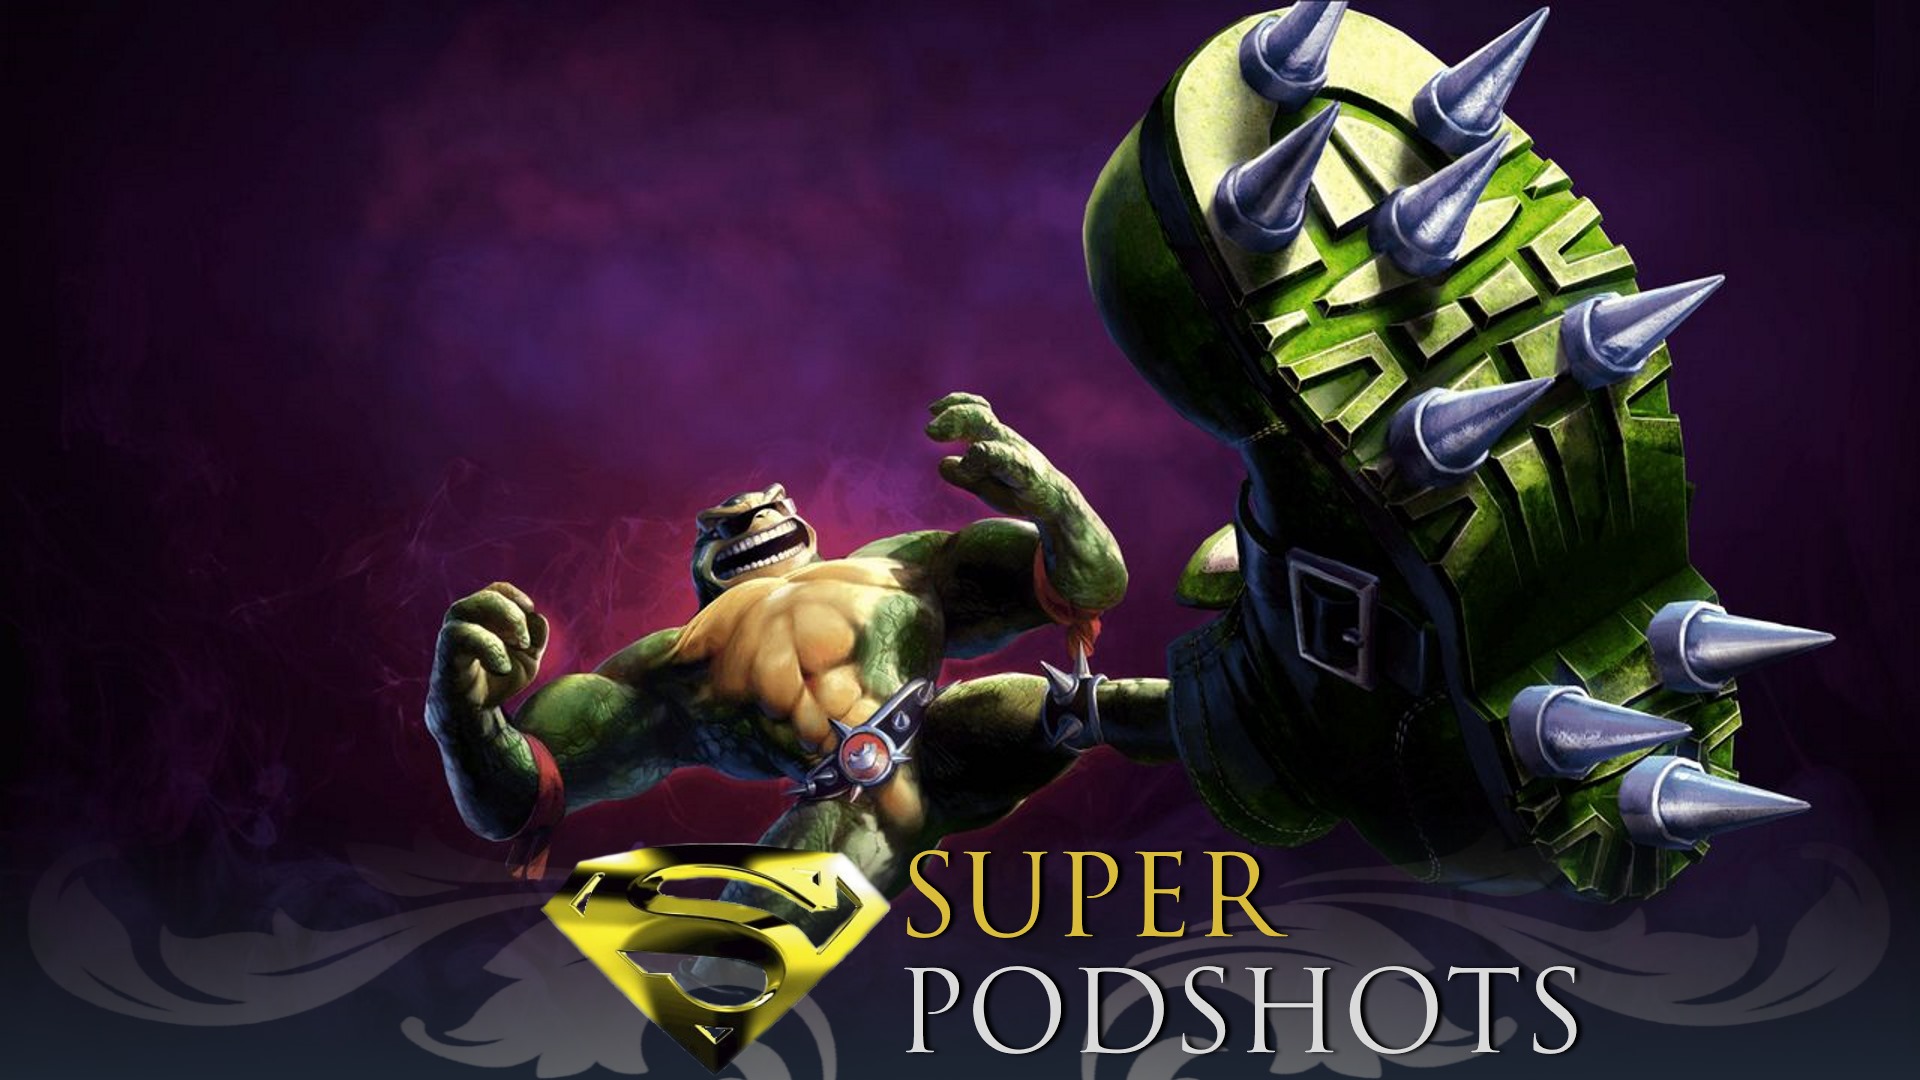 Super Podshots Ep. 49 - Scorpio v. Neo Console War, Xbox E3 rumors & Superman Game By WB? 